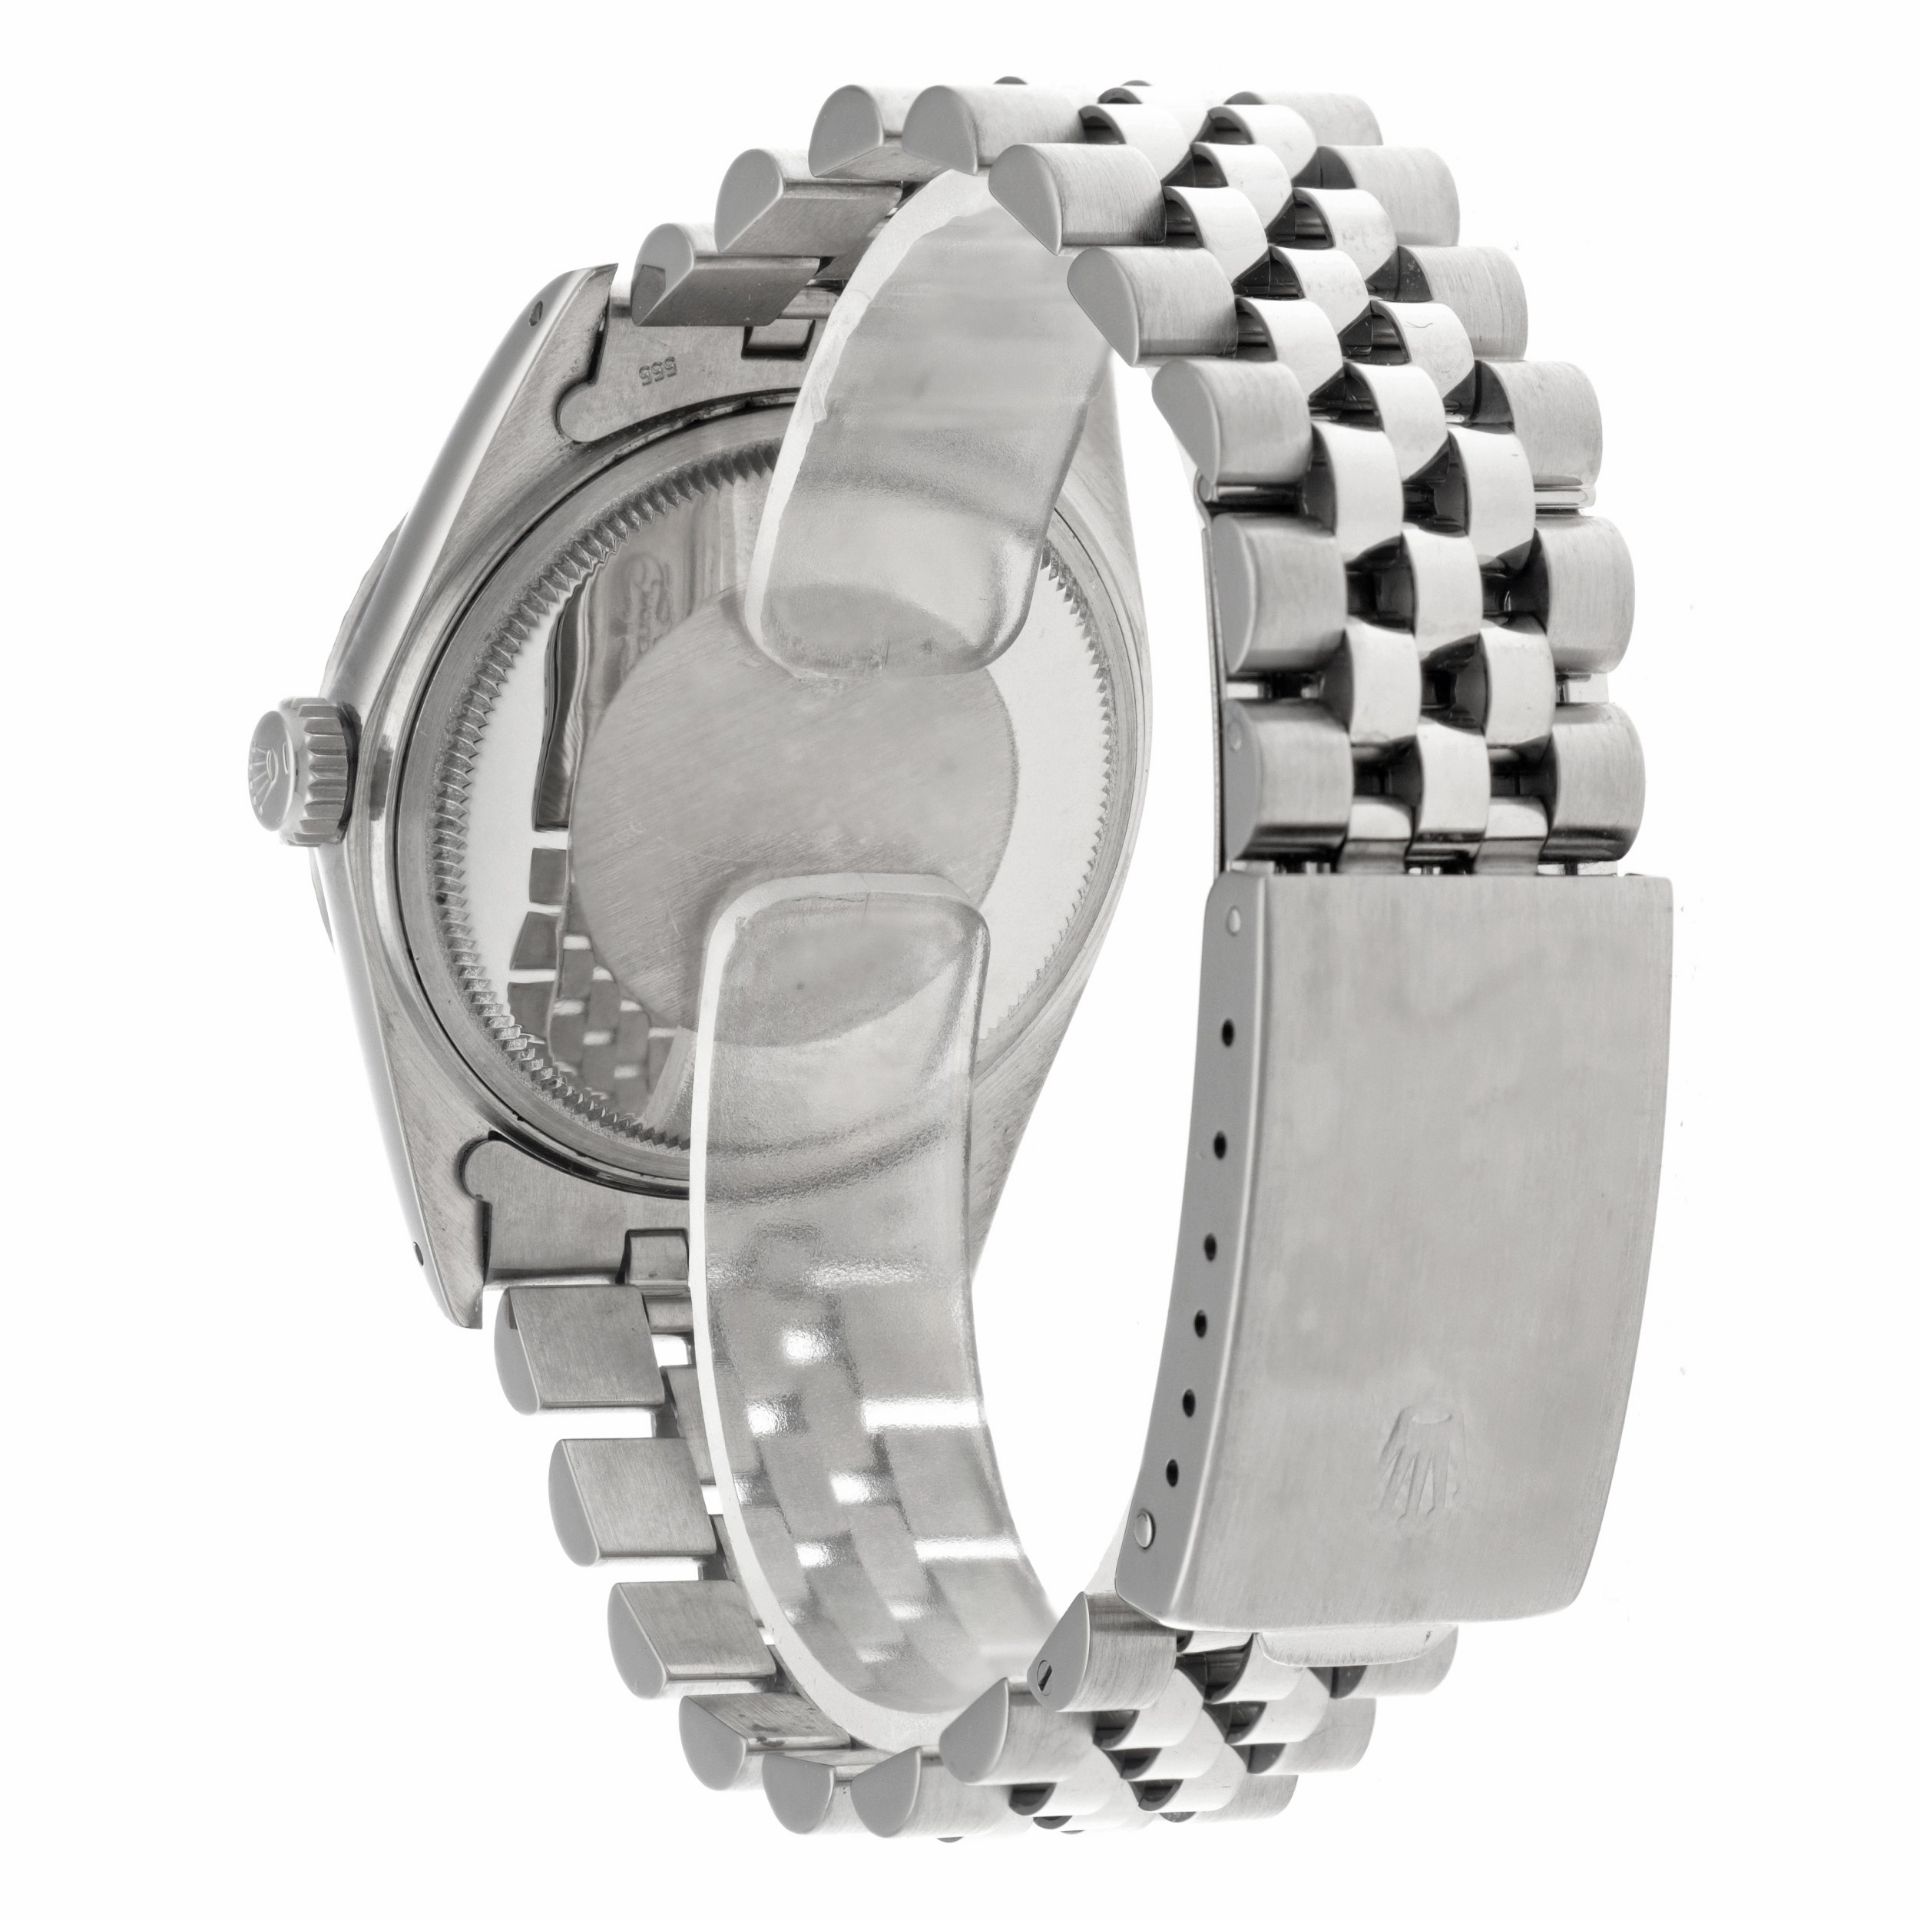 Rolex Datejust 16030 - Men's wrist watch - approx. 1987. - Image 2 of 5